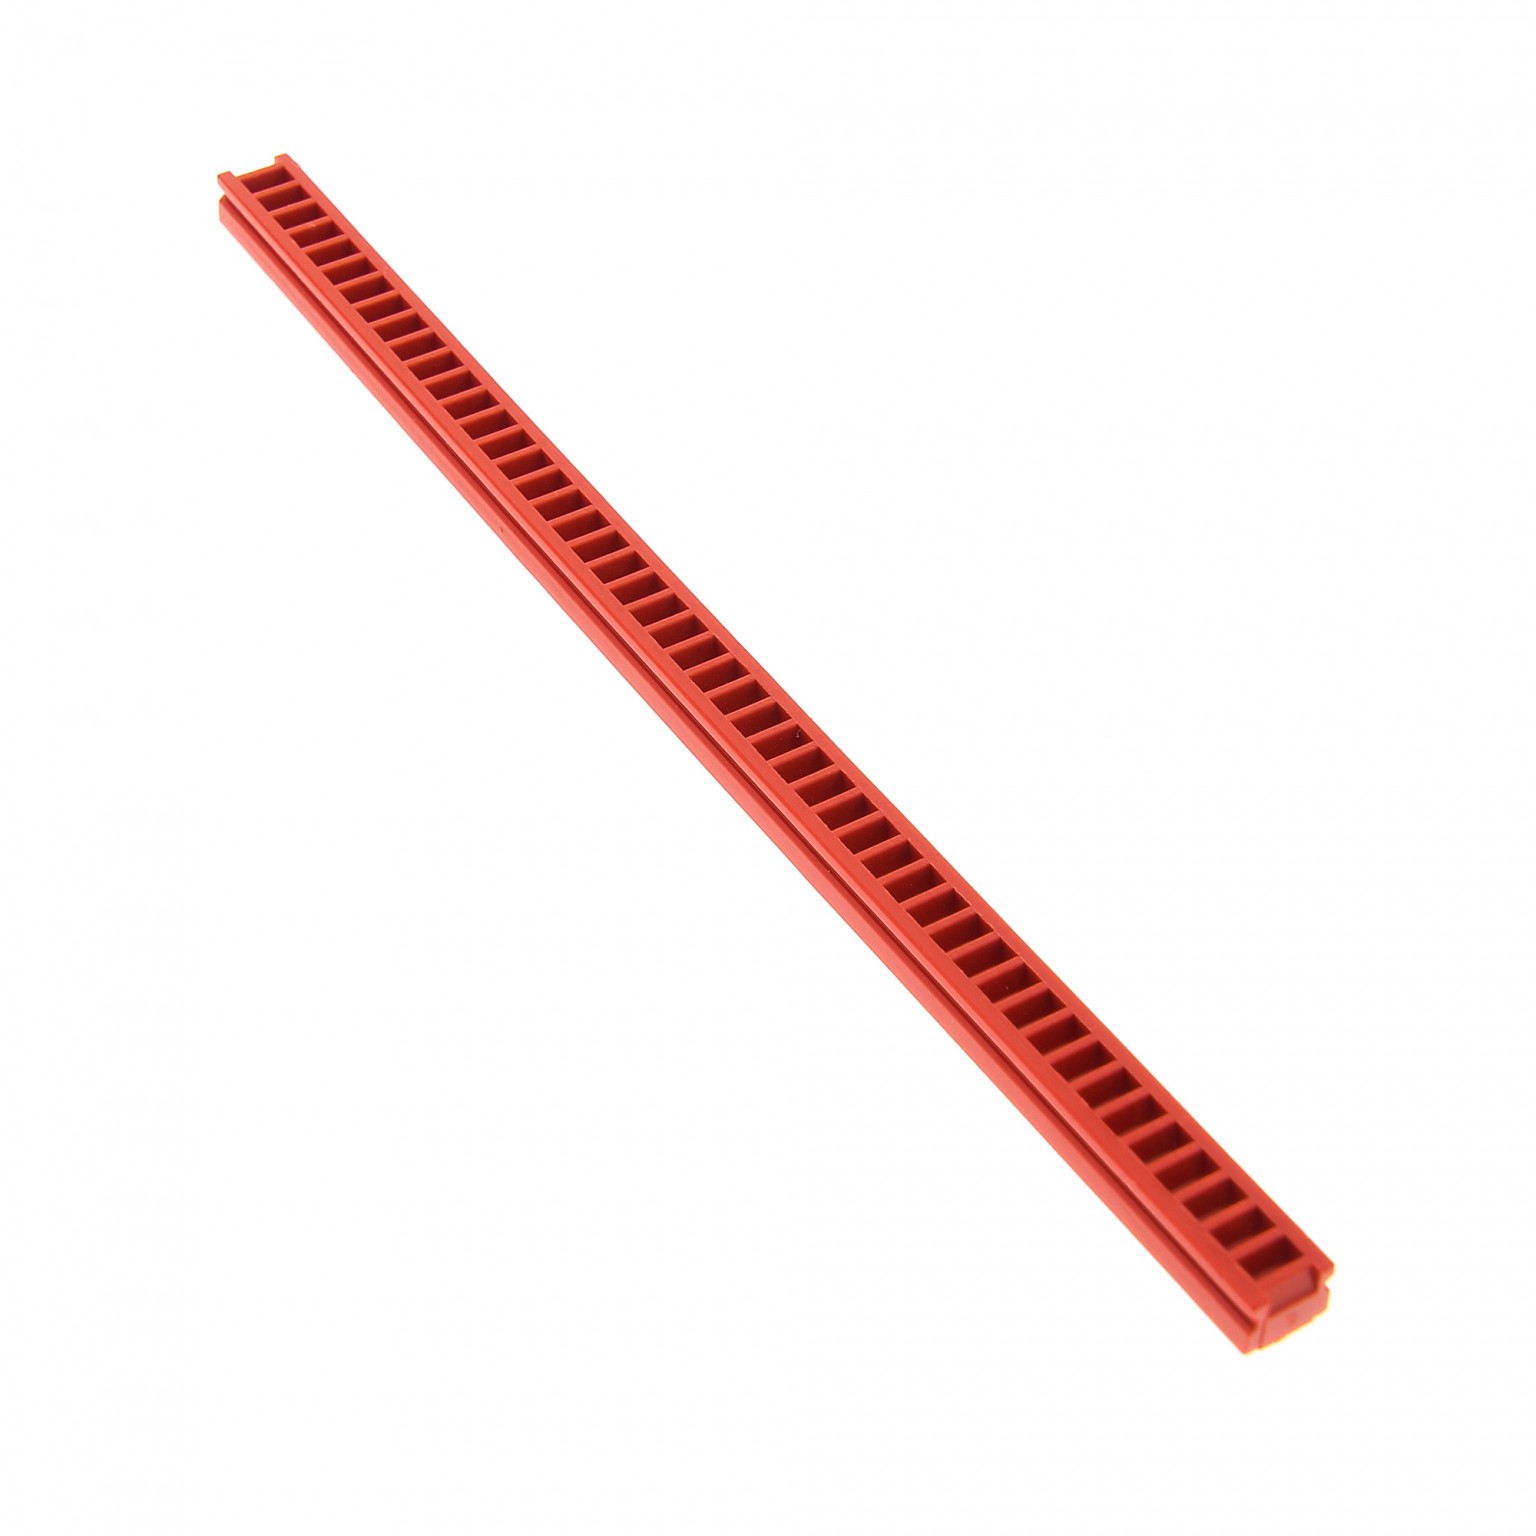 Lego® Technic Zahnstange 2428 Rack 1x20x2/3 rot red aus 6989 6394 